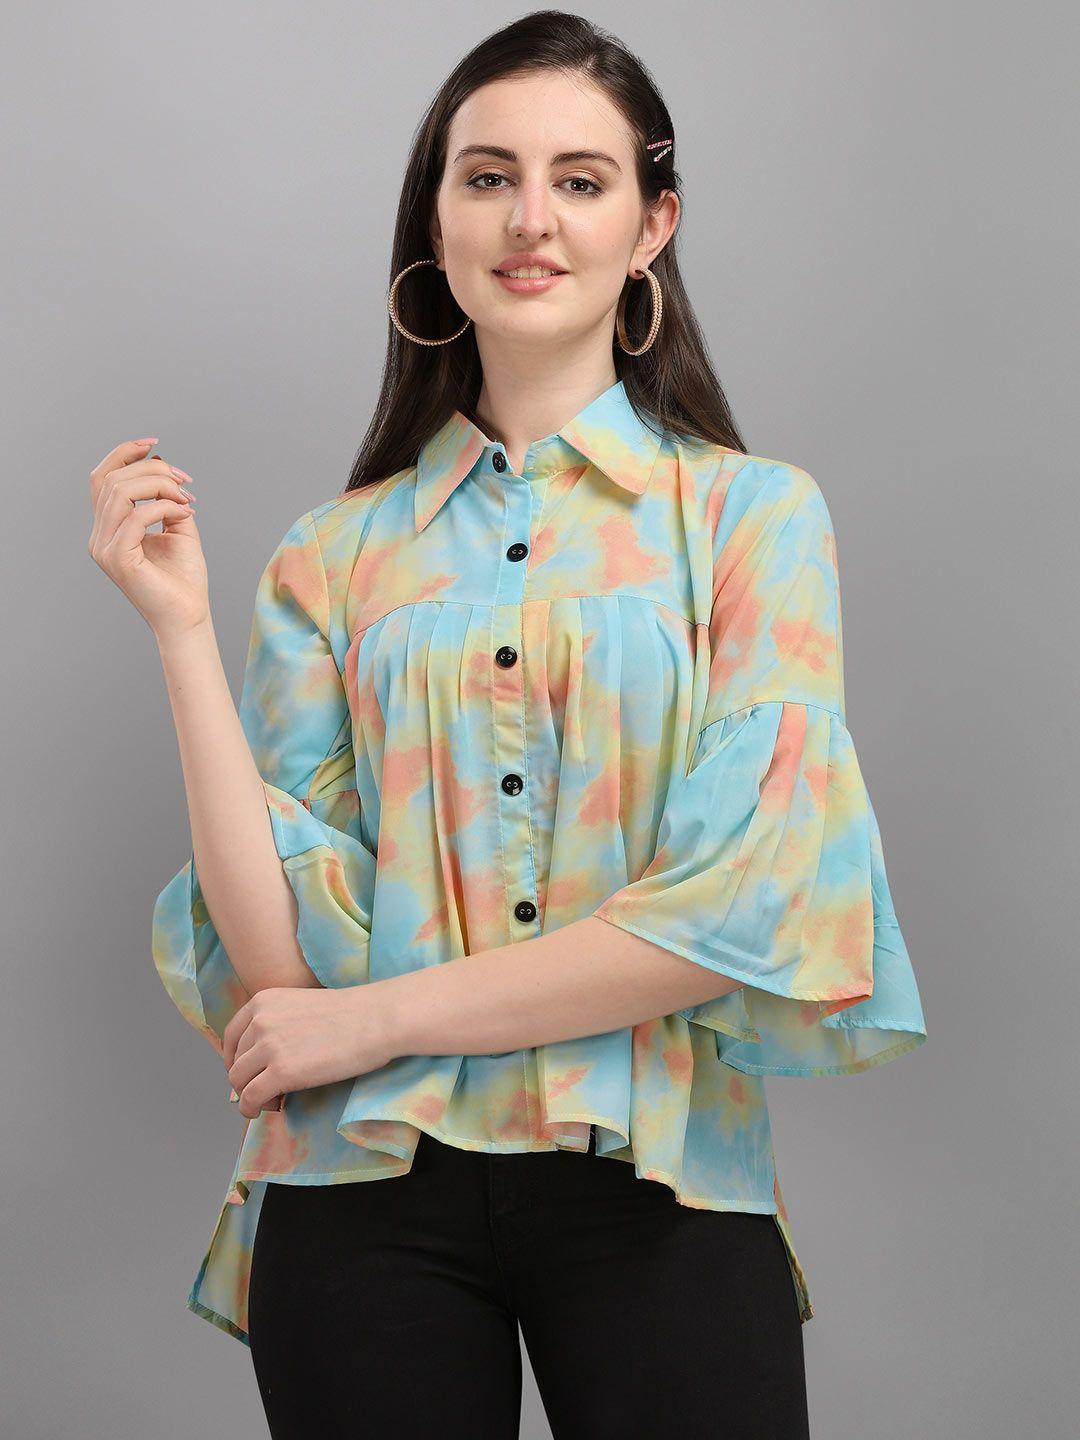 wedani yellow & blue print linen shirt style top